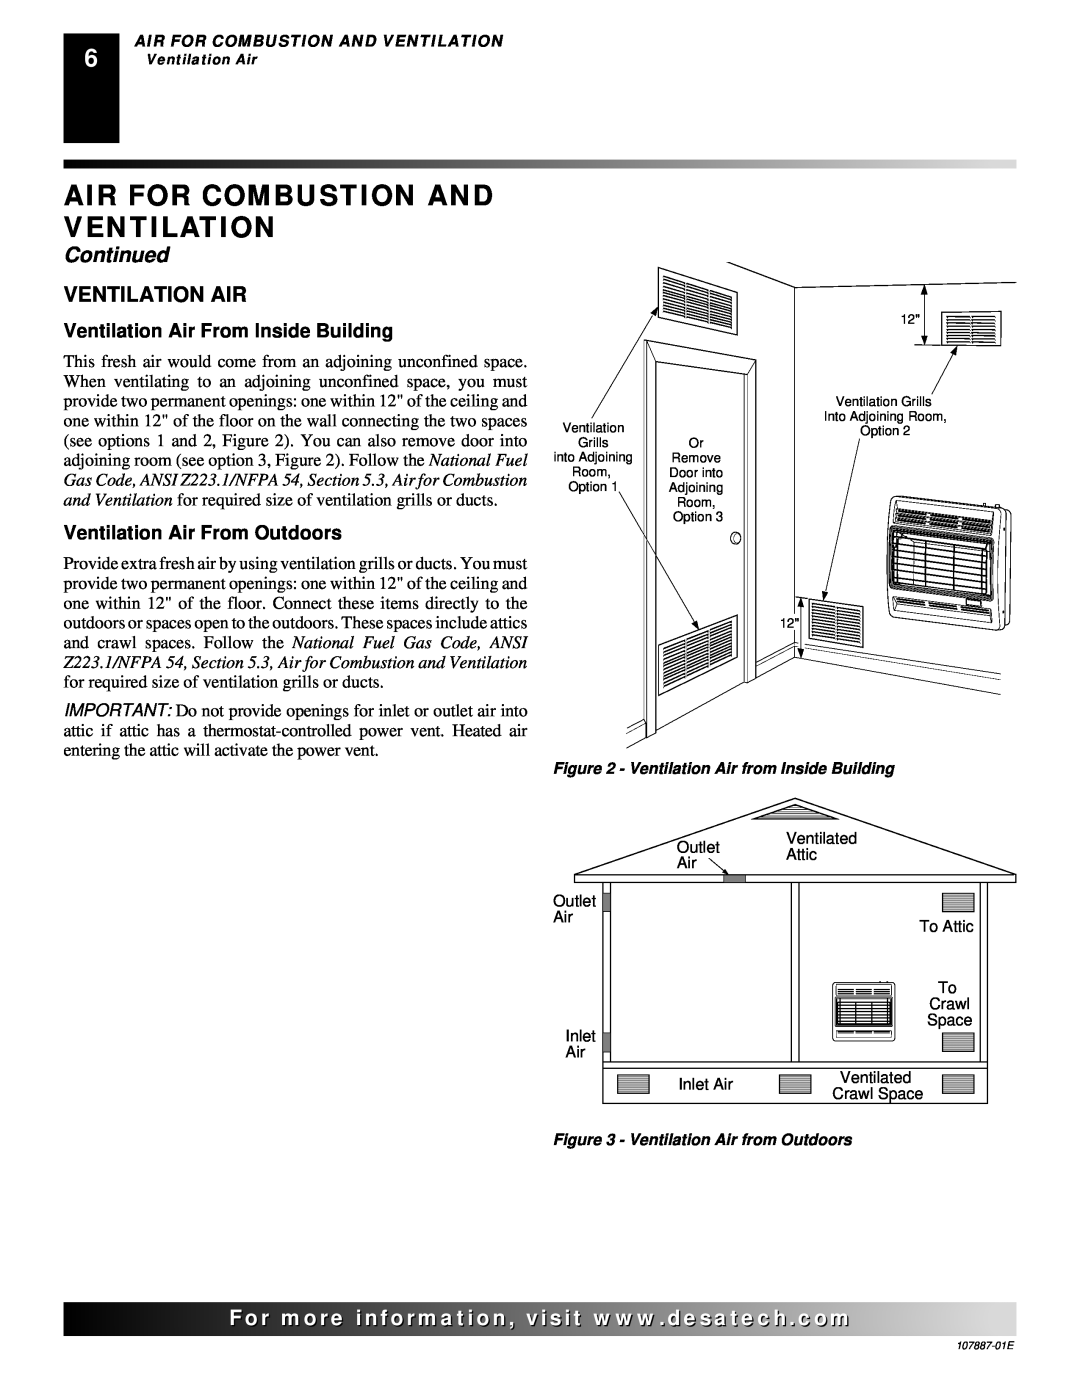 Desa VP16T Ventilation Air From Inside Building, Ventilation Air From Outdoors, Air For Combustion And Ventilation 